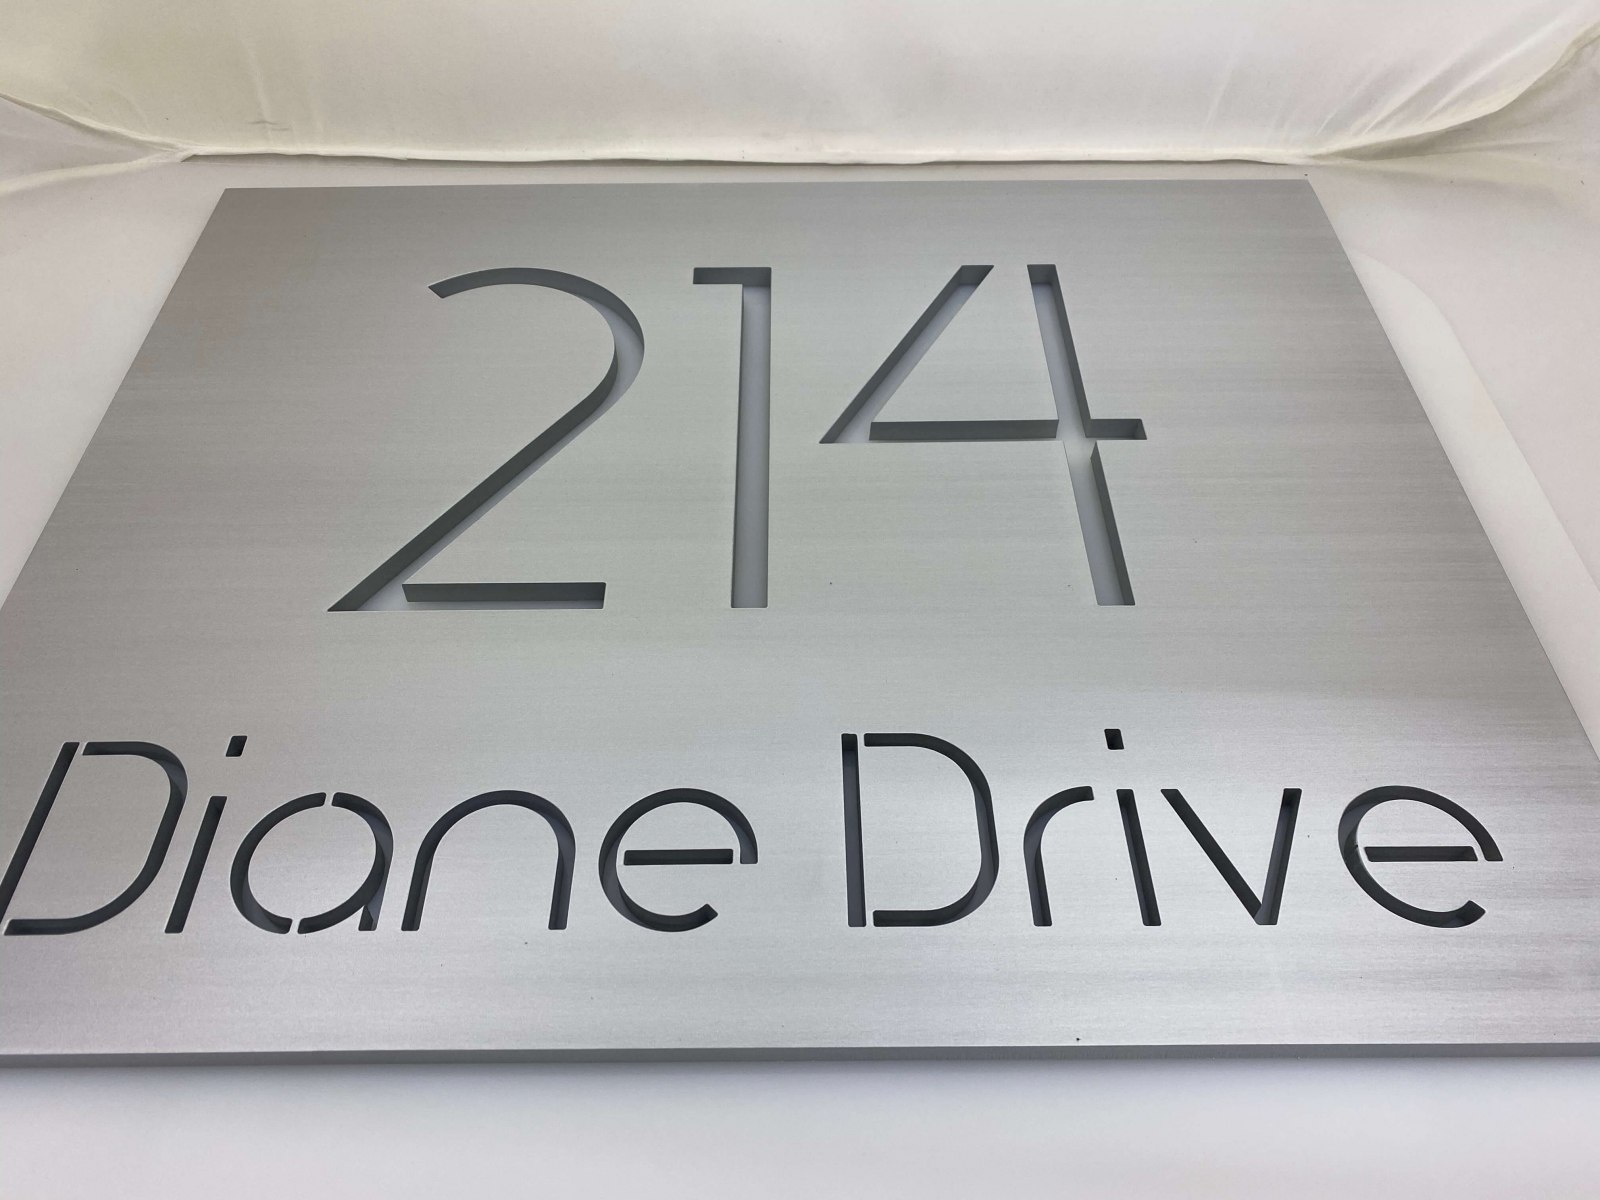 Vivid House Number | Custom Residential Address Signs | 214 Diane Drive | Aluminum Finish